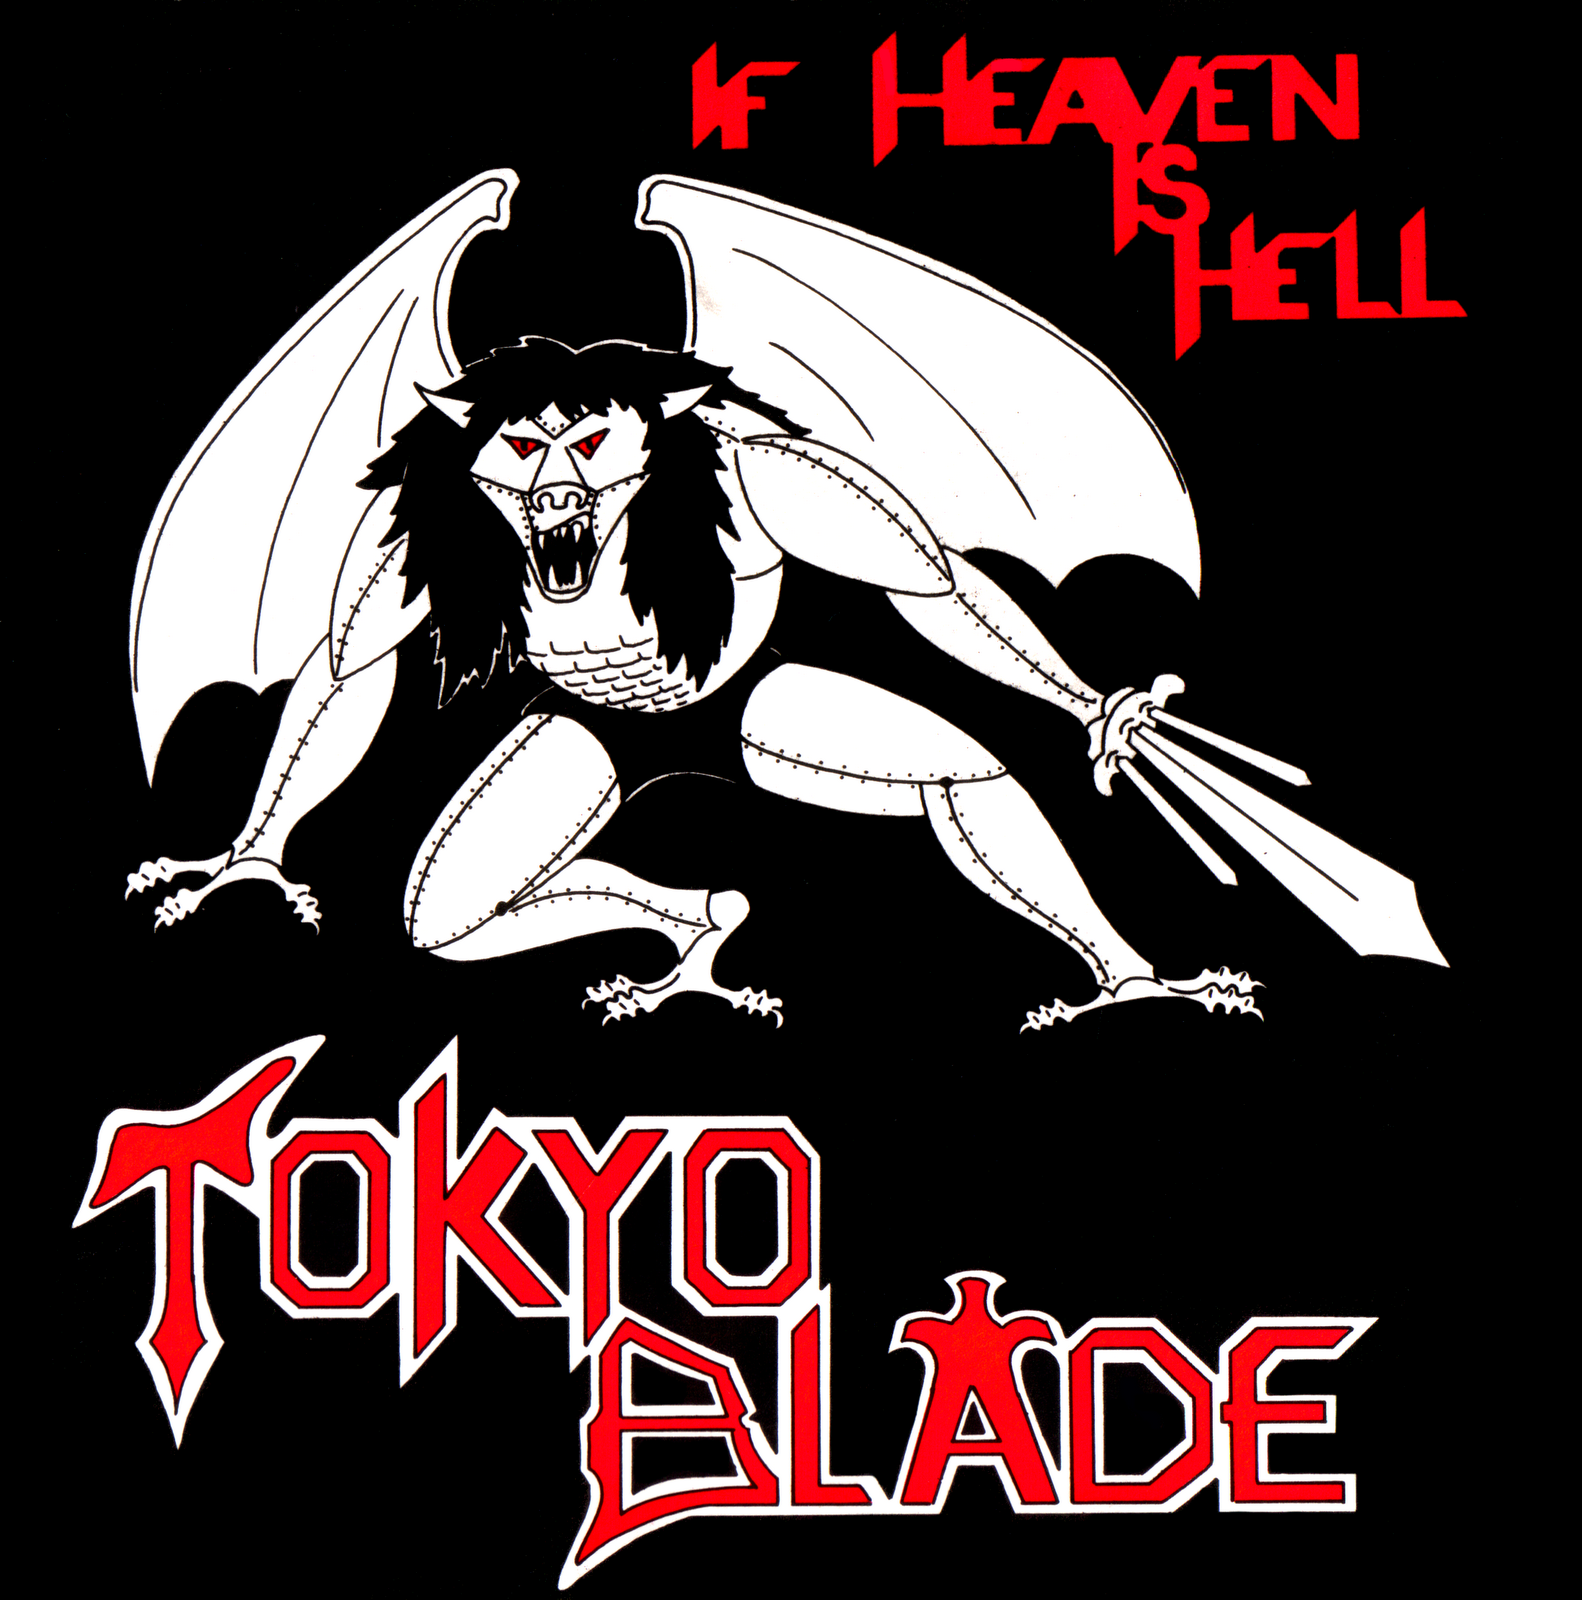 Хевен энд хелл. 1983 - Tokyo Blade. Tokyo Blade 1983 Tokyo Blade. Tokyo Blade 2022. Tokyo Blade дискография.